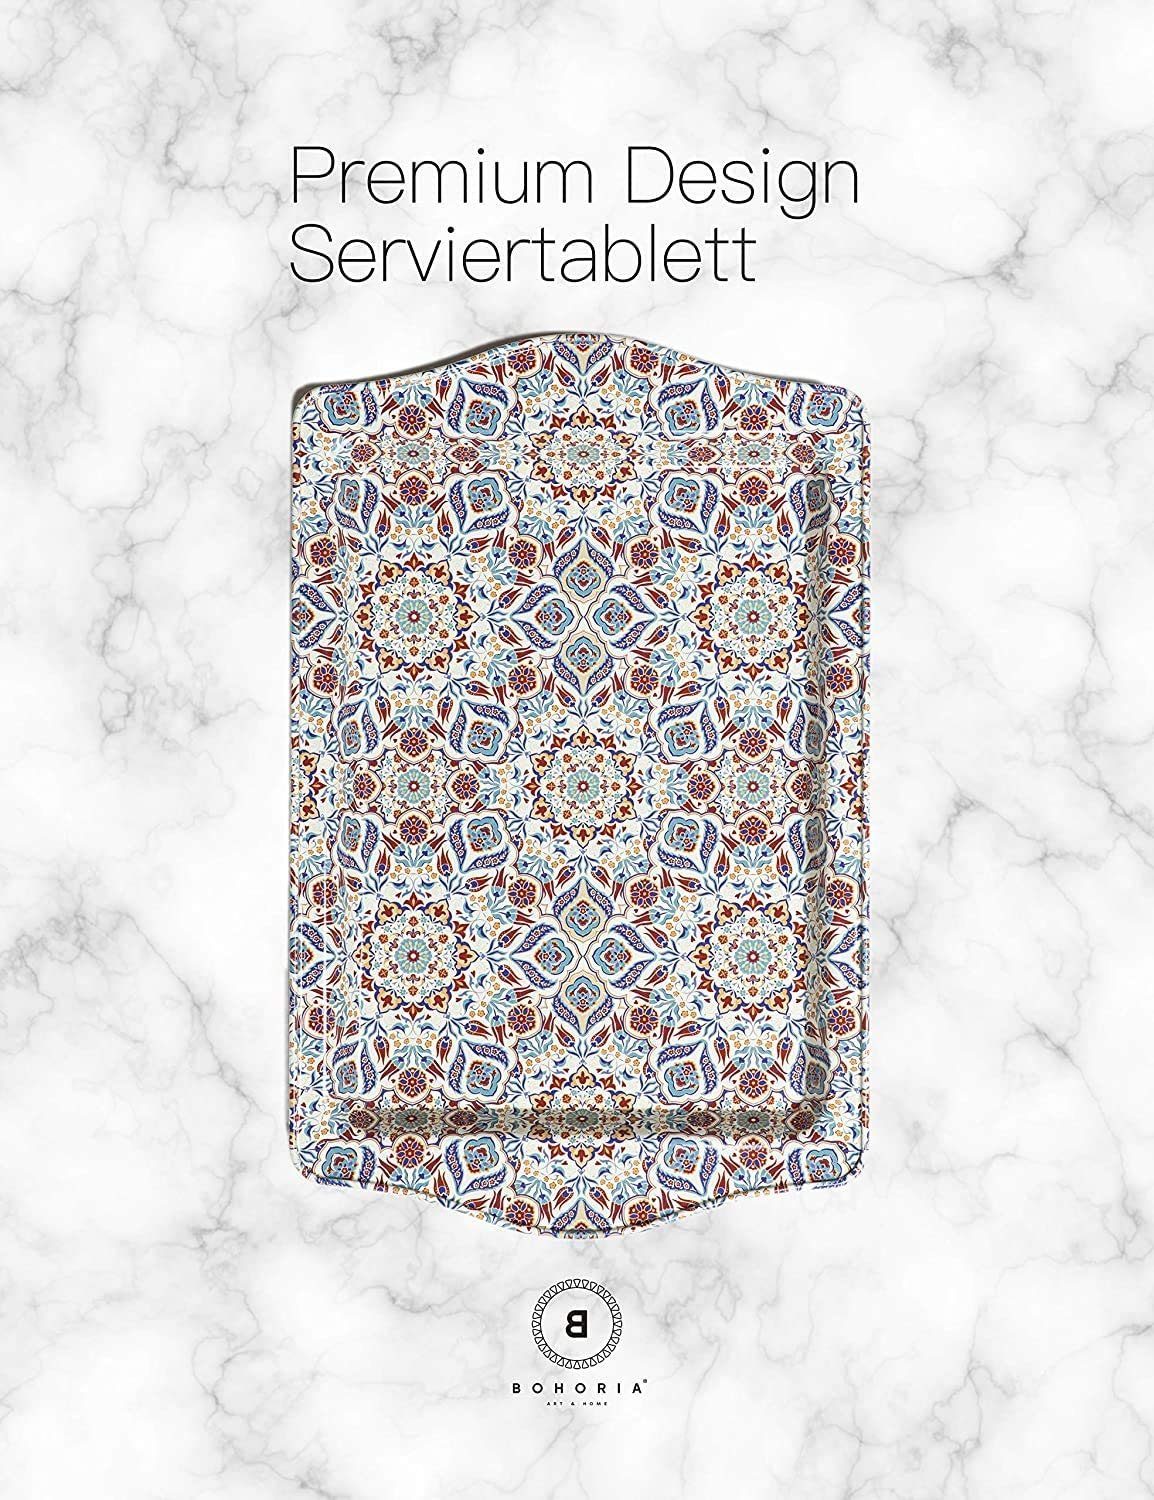 BOHORIA Marrakech Dekotablett Set 2er Serviertablett Premium BOHORIA